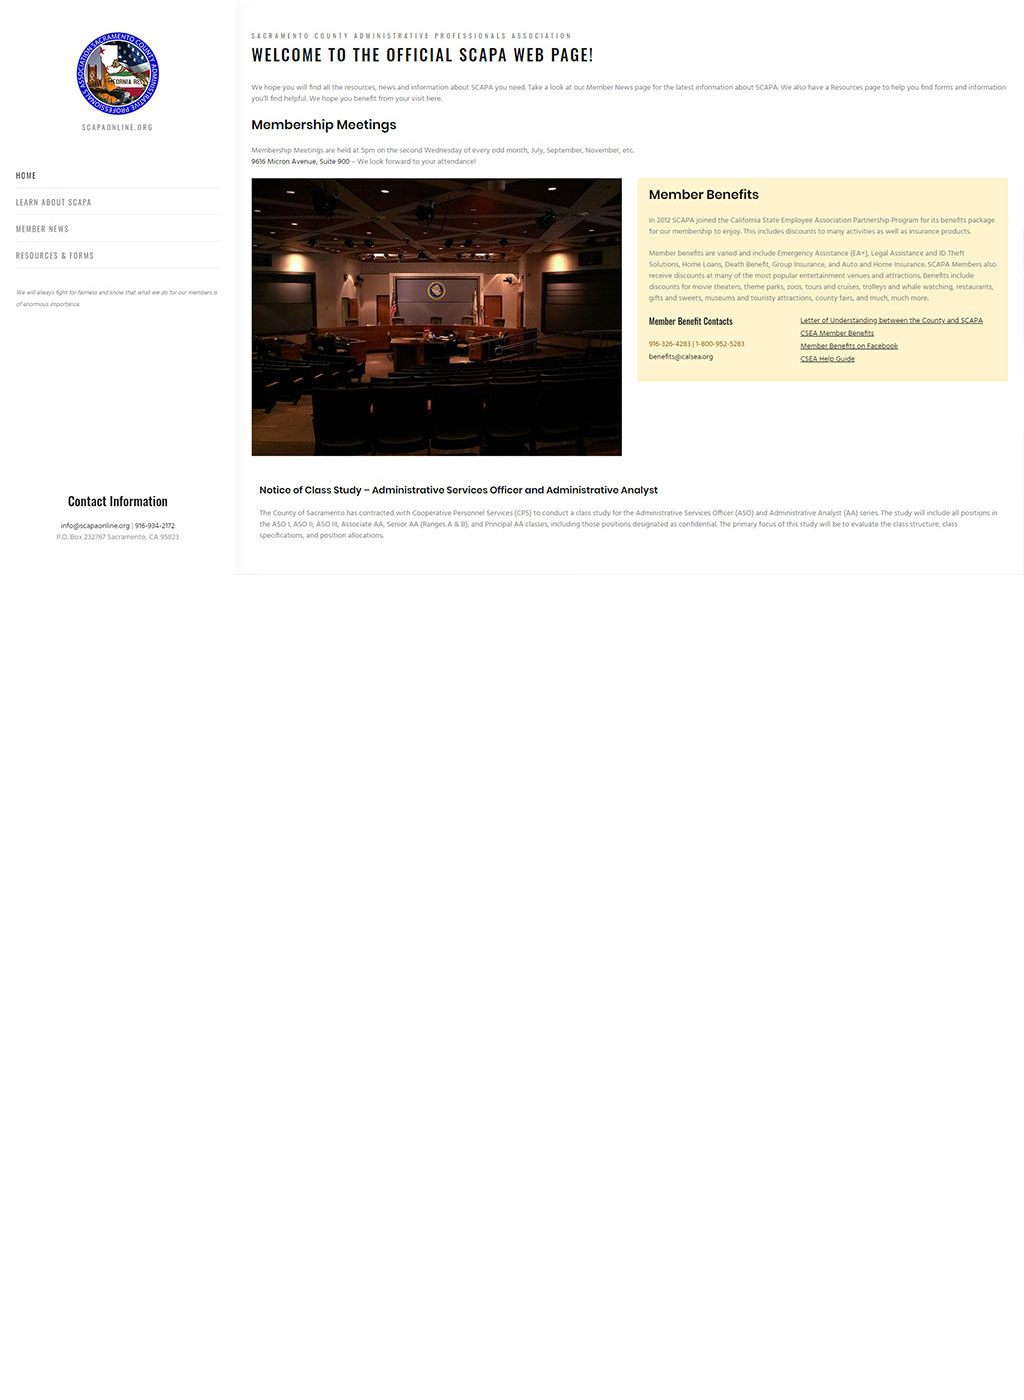 Home page developed for Sacramento county labor union website